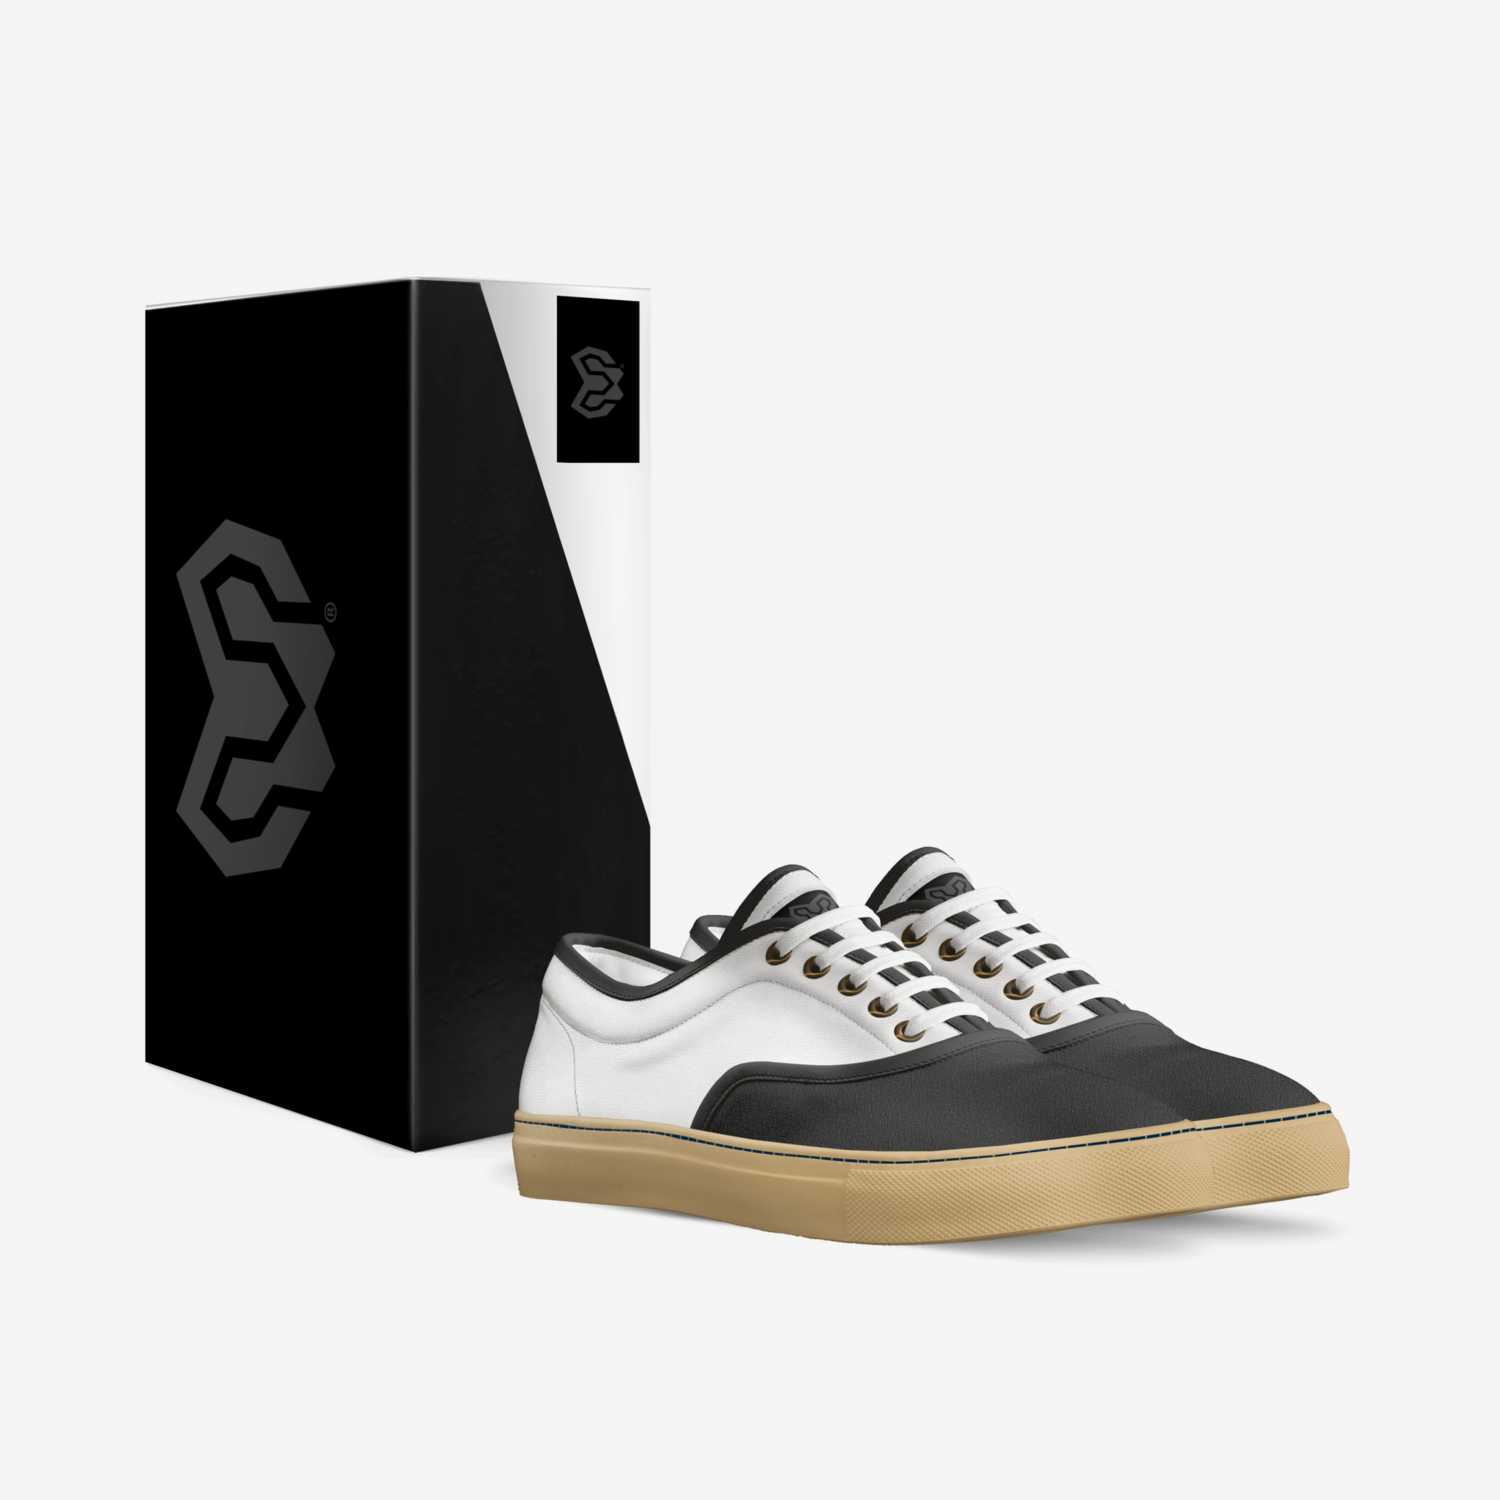 St Animal Gangska1 custom made in Italy shoes by Saint Animal | Box view